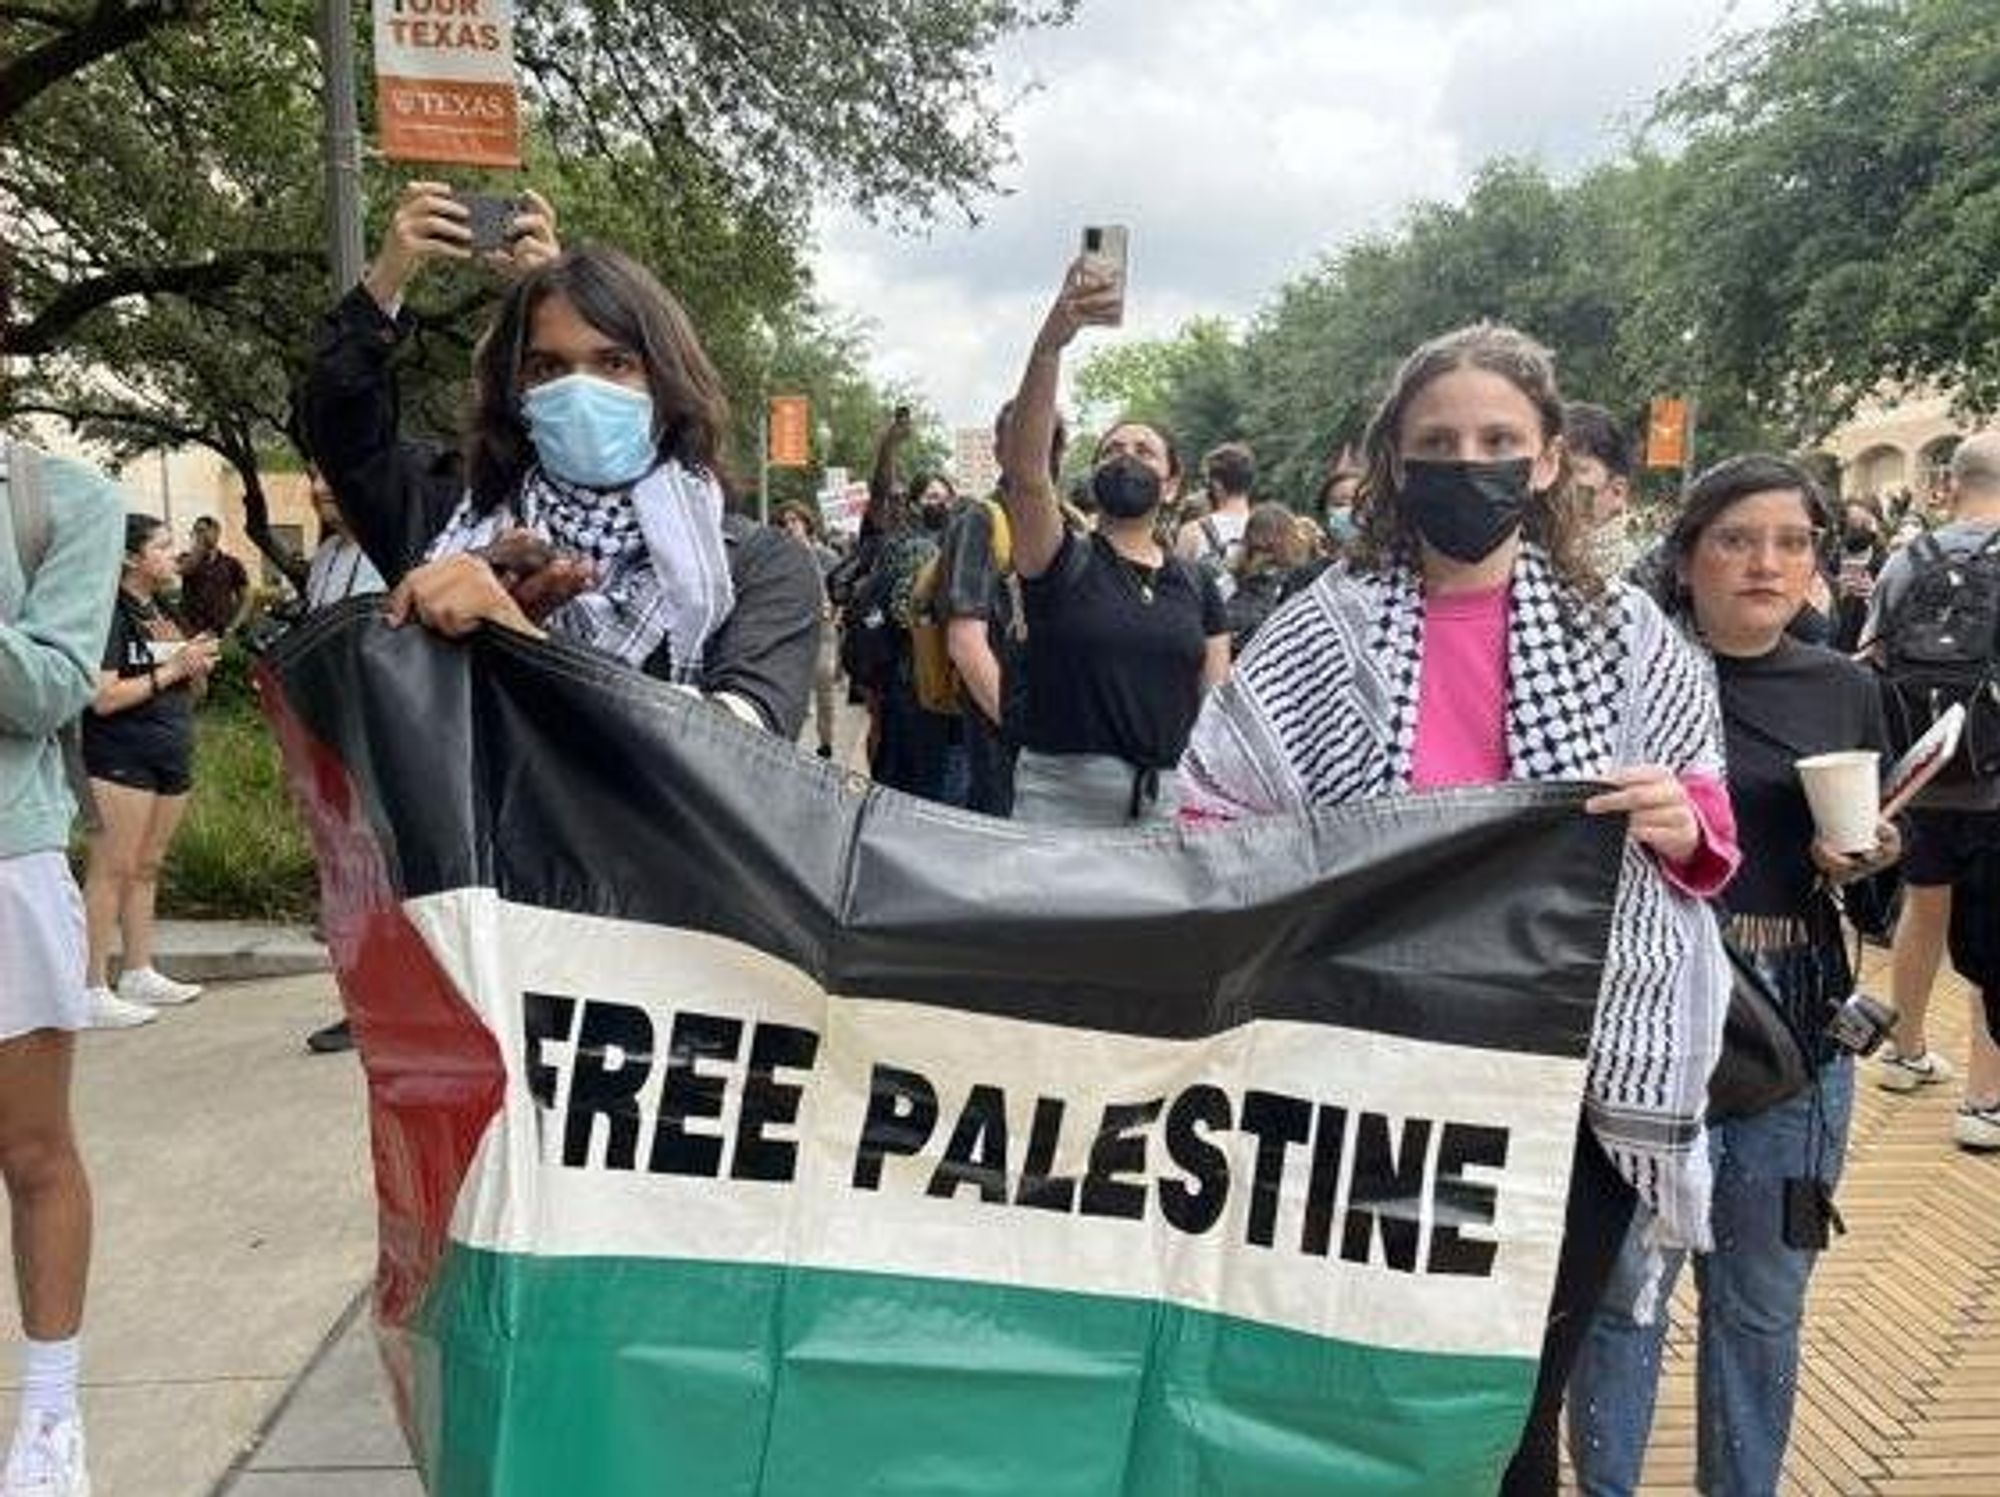 University of Texas at Austin pro-Palestine protestors